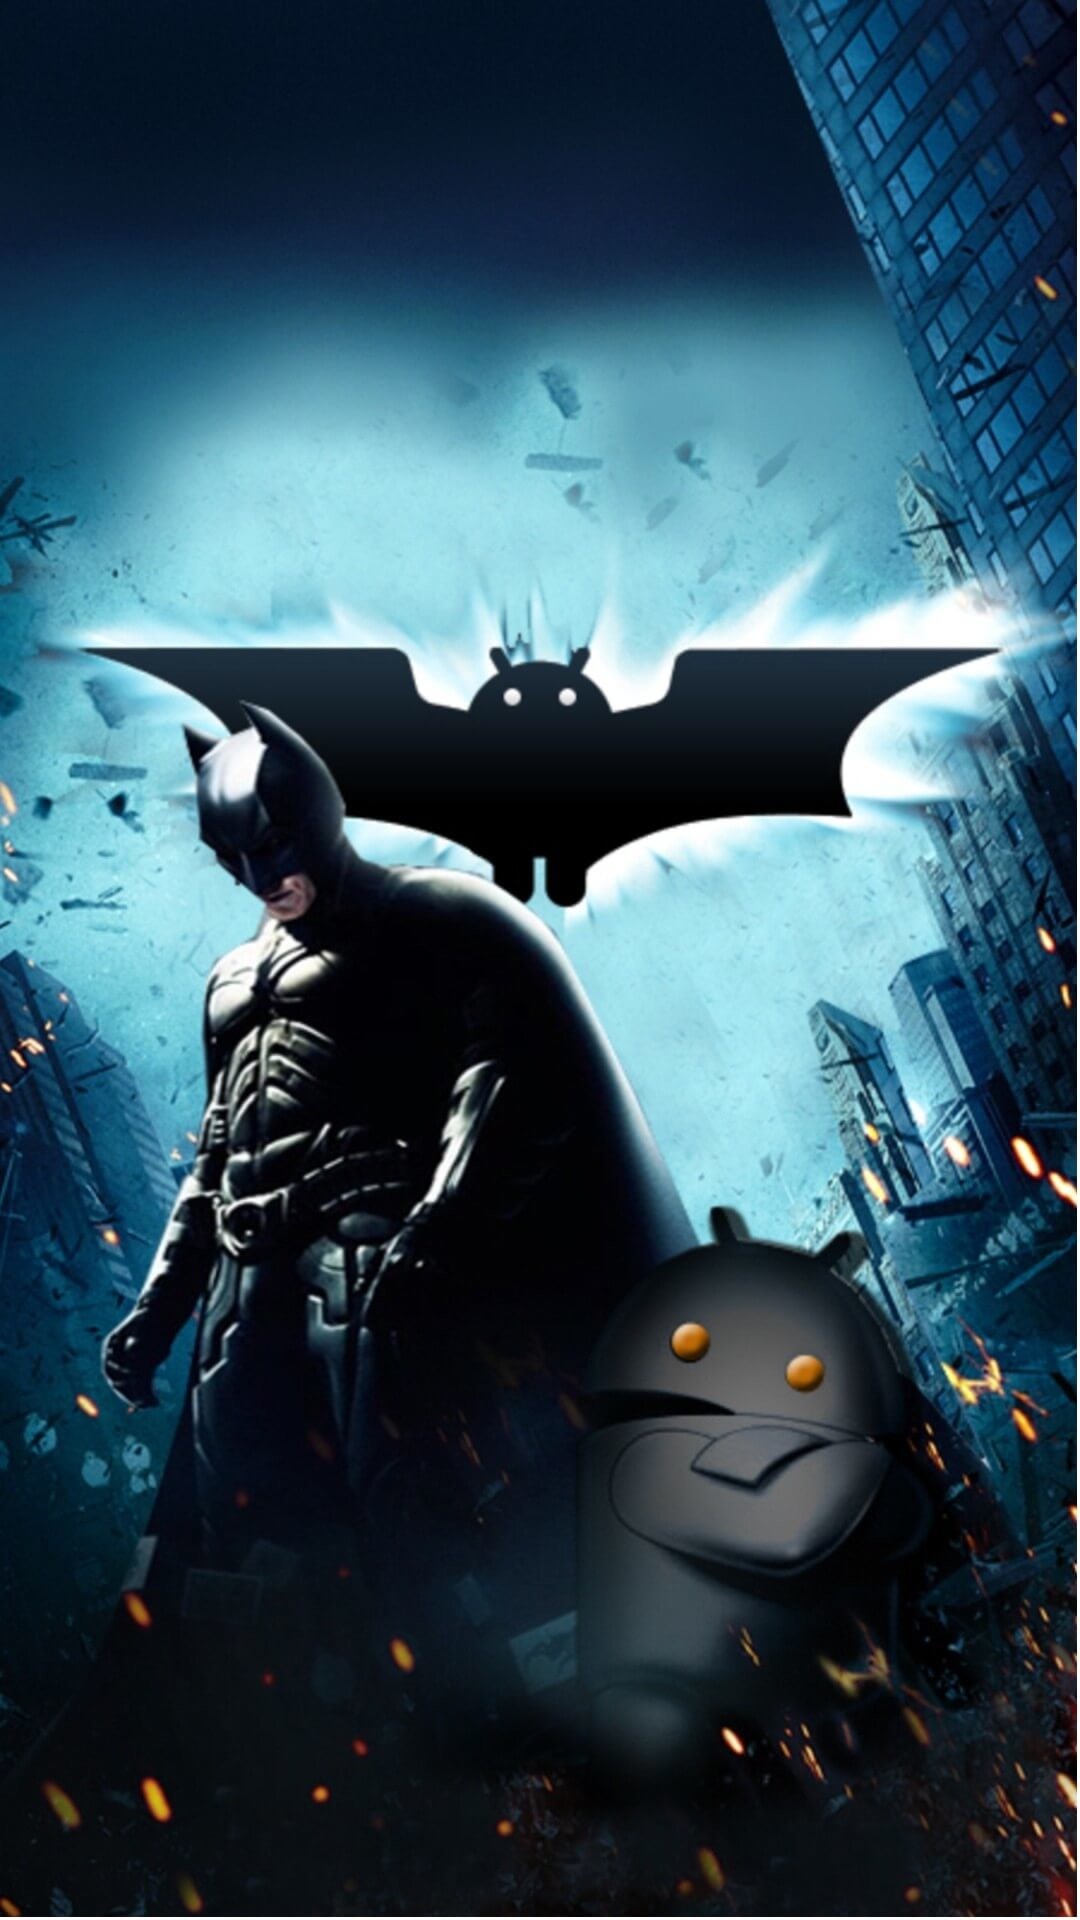 1080x1920 Batman Iphone Wallpaper Batman Wallpaper for Iphone Pinterest